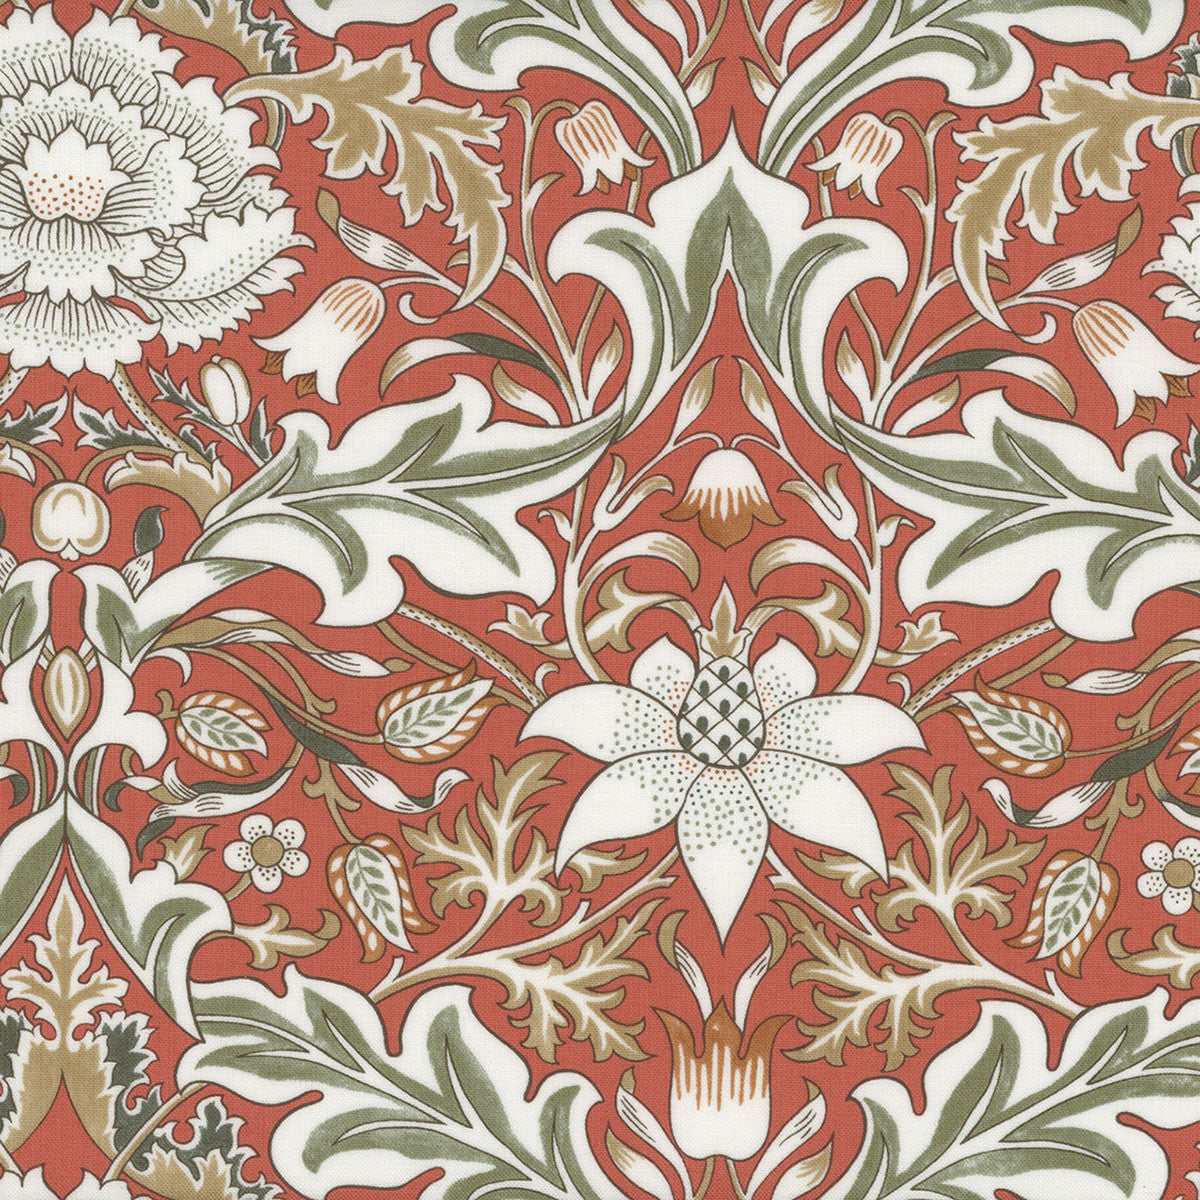 Severne Red by The Original Morris & Co Fabrics